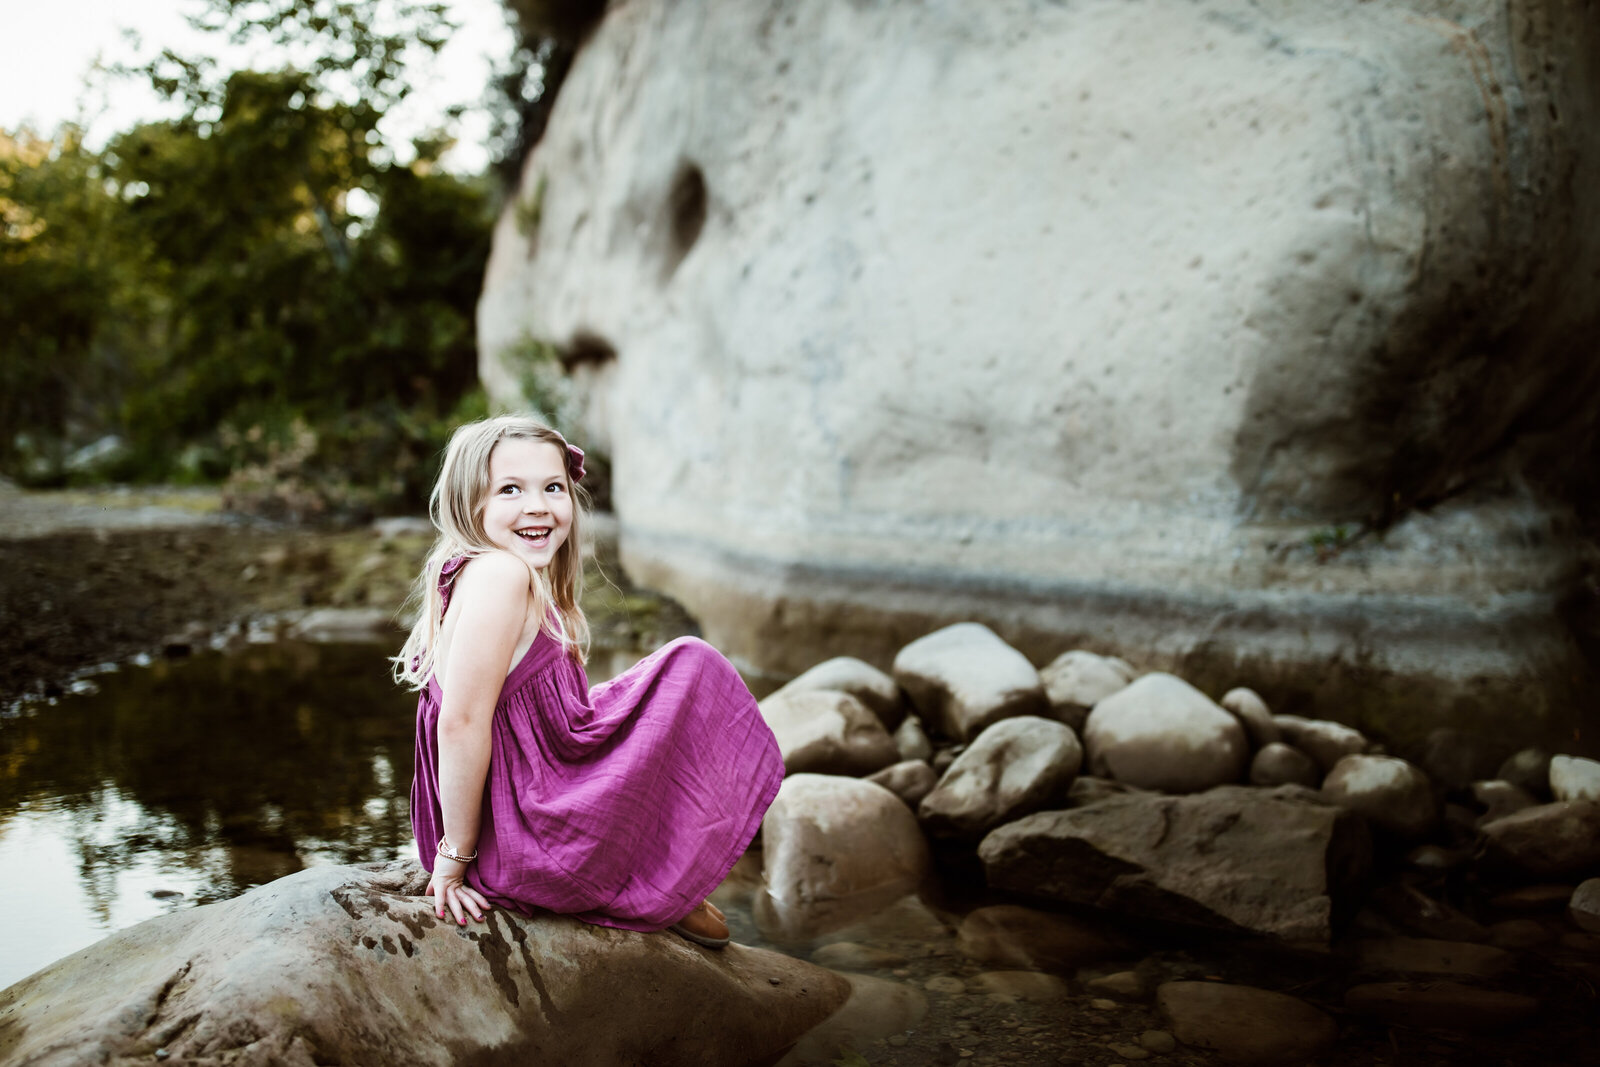 untitled-220430-105-EditFamily-Photo-Santa-Barbara-County-Girl-sitting-rock-water-smiling-purple-dress